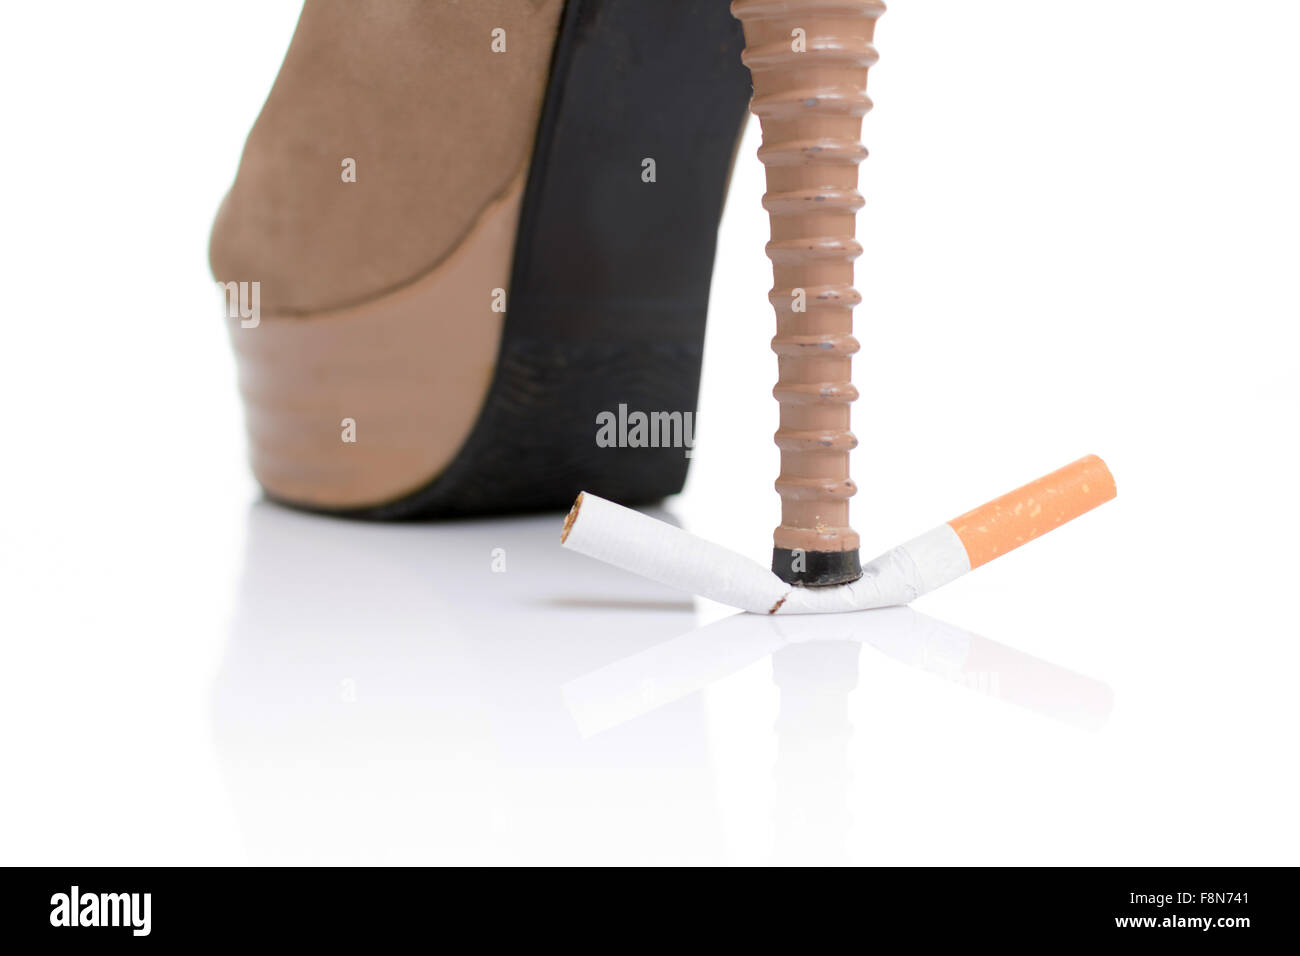 Calzatura donna o tacco pausa sigaretta su sfondo bianco Foto Stock